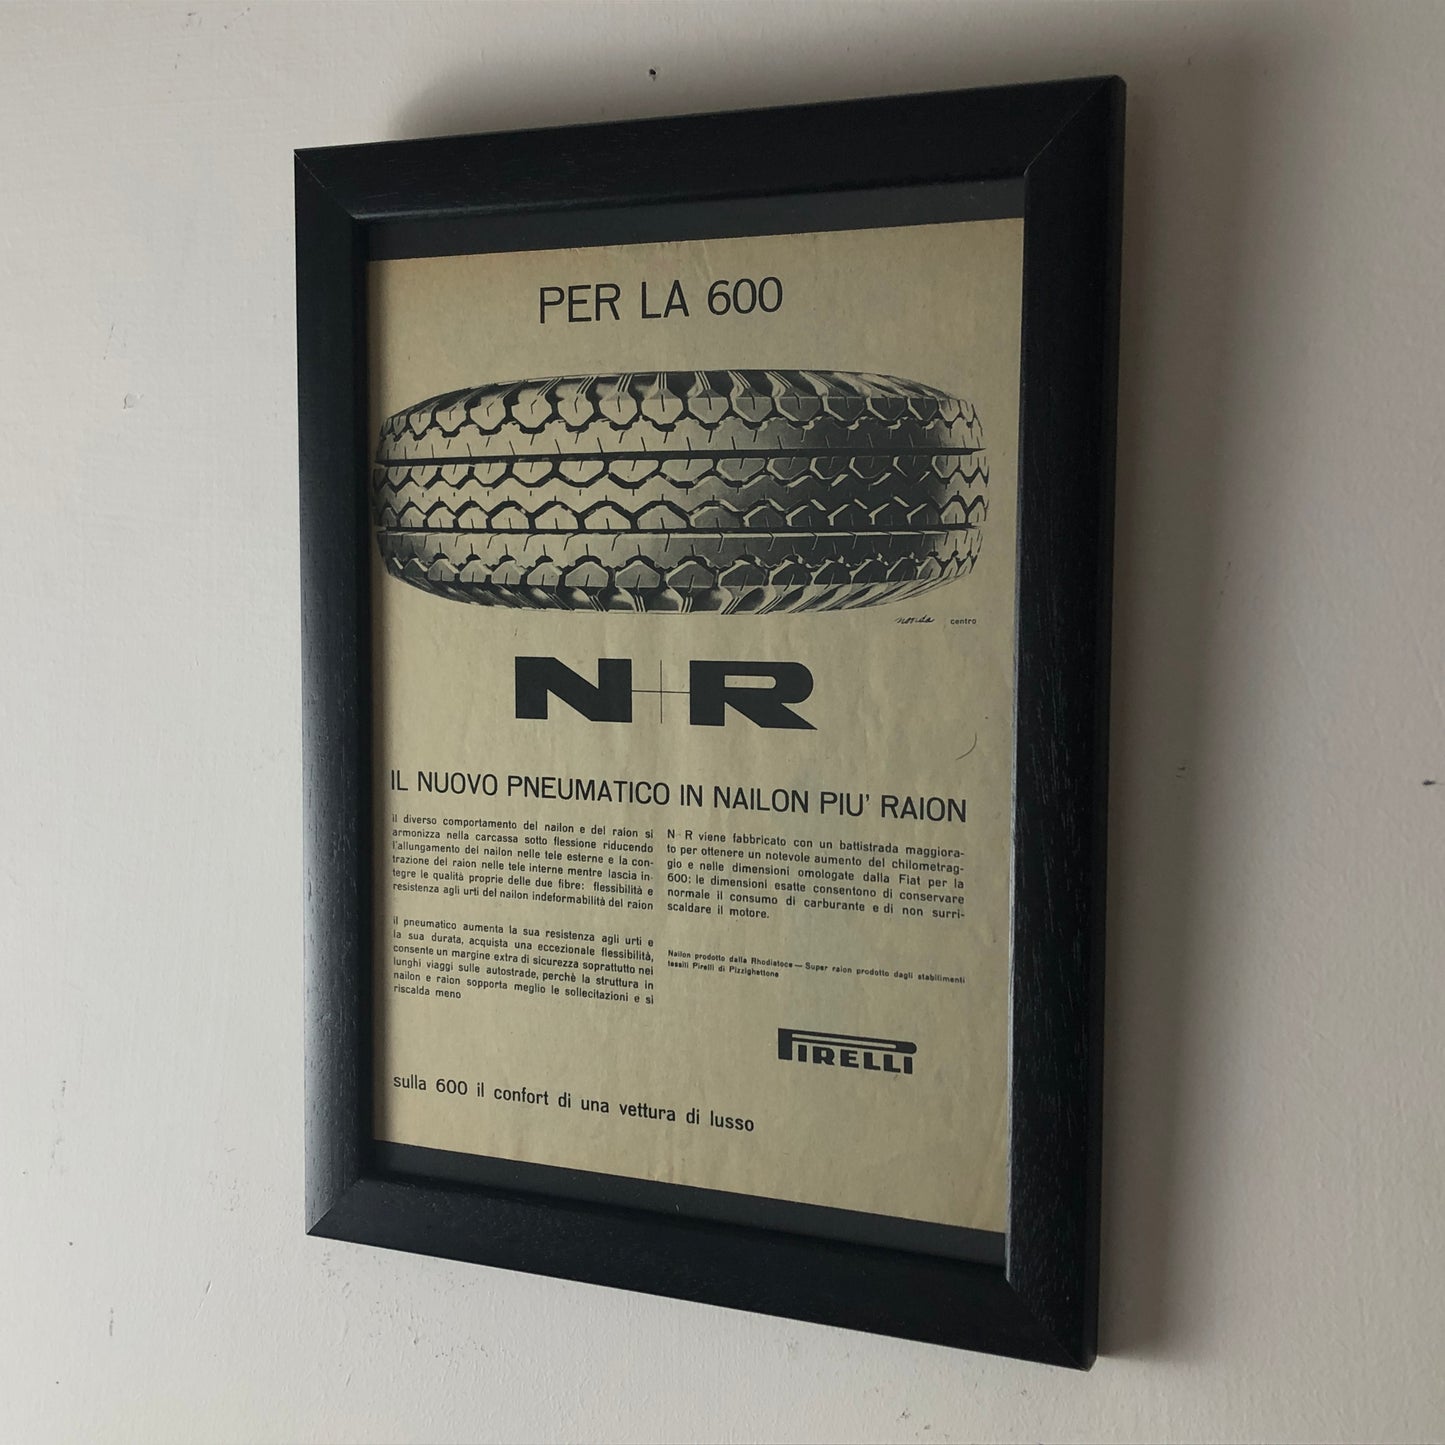 Pirelli, Advertising Year 1960 Pirelli Tires in Nylon and Raion for Fiat 600